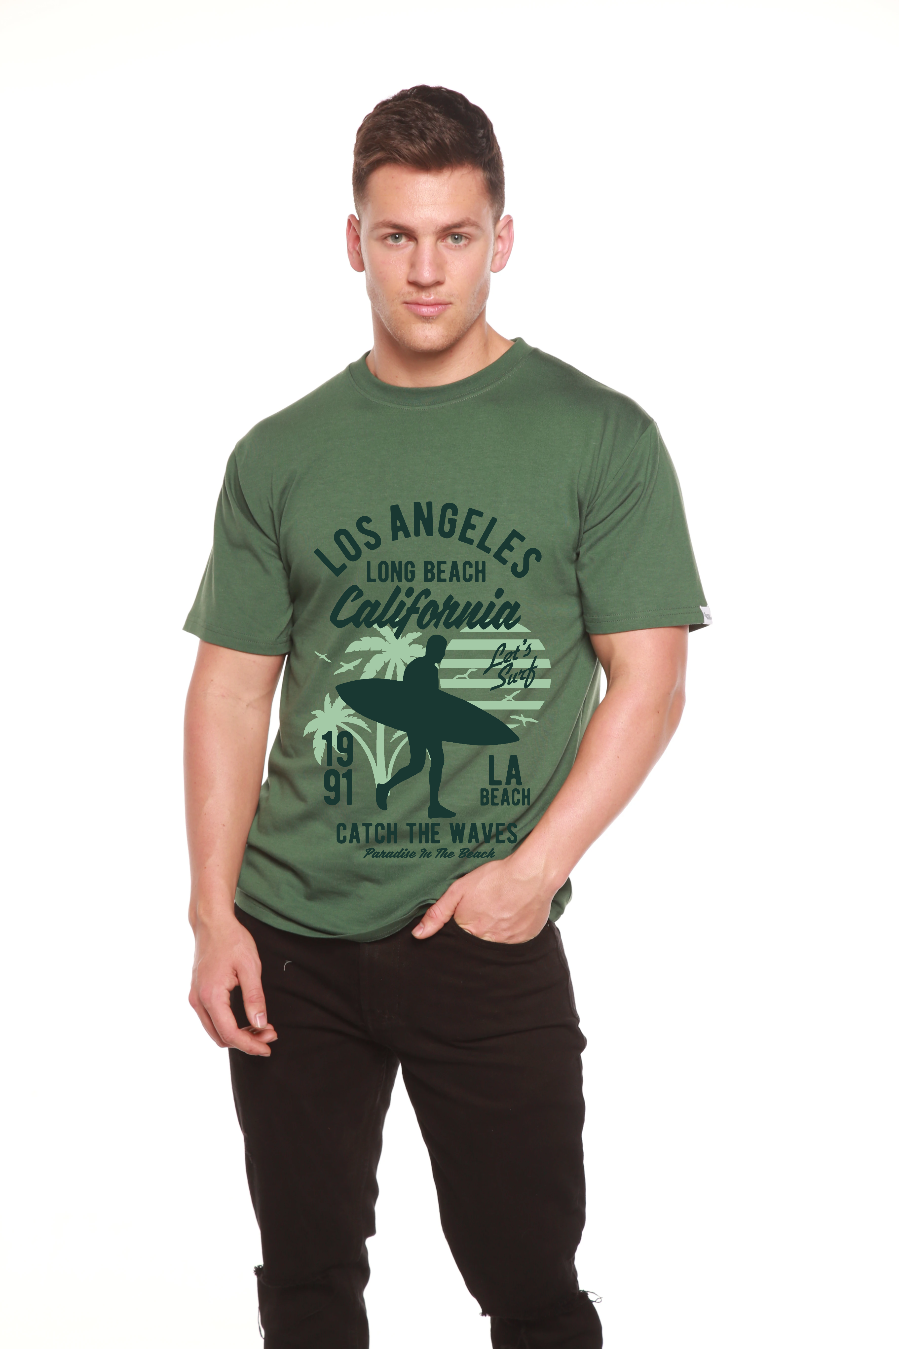 Los Angeles Men's Bamboo Viscose/Organic Cotton Short Sleeve T-Shirt - Spun Bamboo